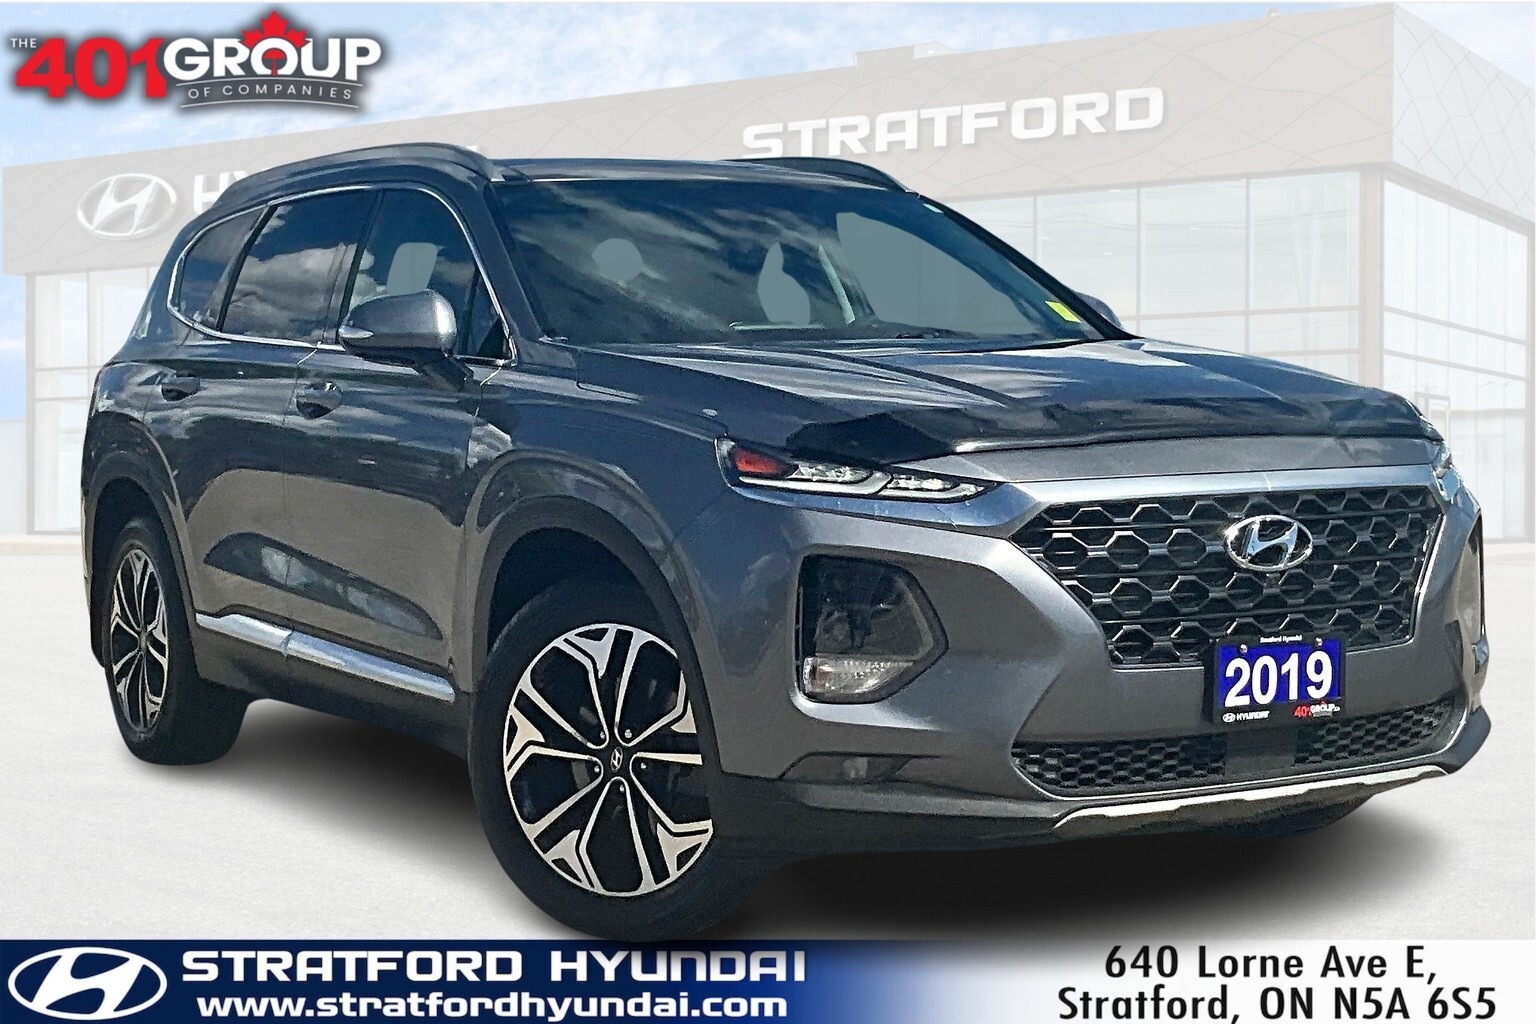 2019 Hyundai Santa Fe Ultimate AWD | Lthr Heat/Vent Seat | Sunroof | HUD